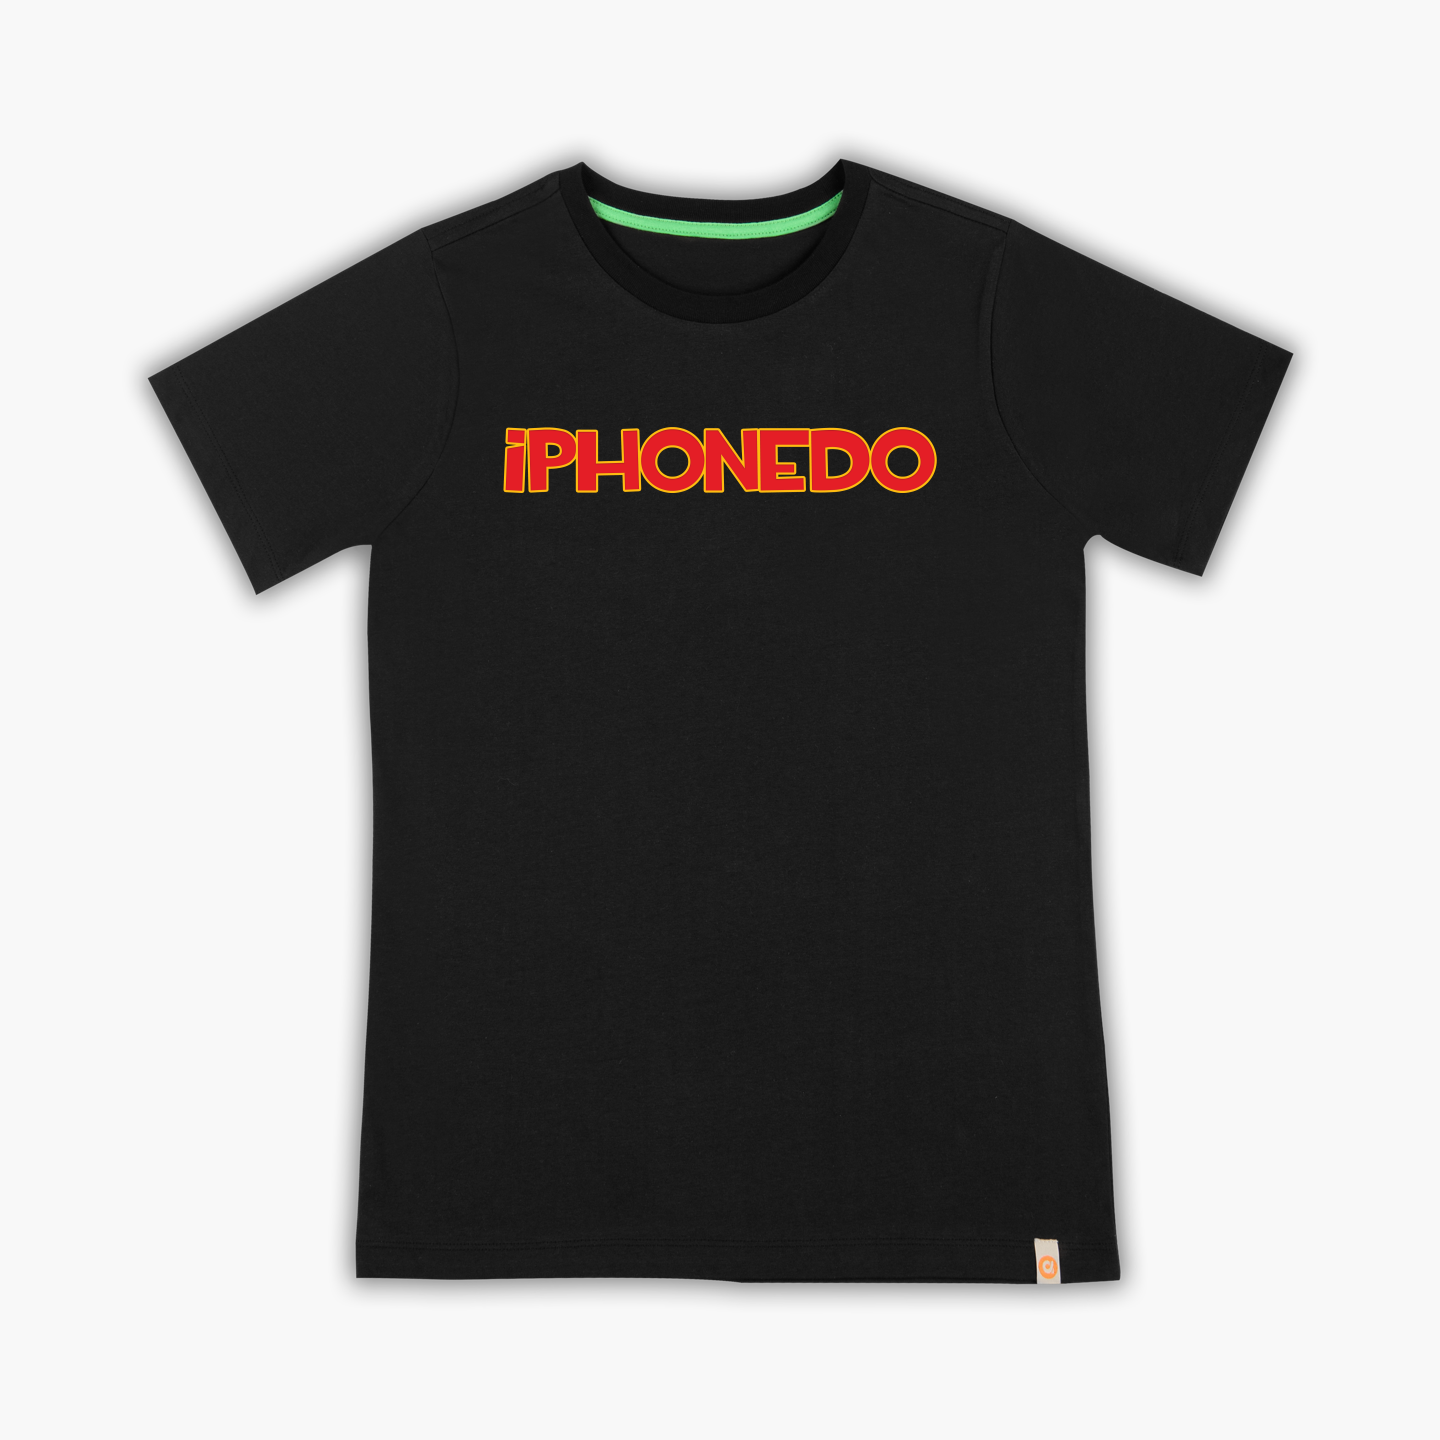 iPhonedo Logo 3 - Tişört